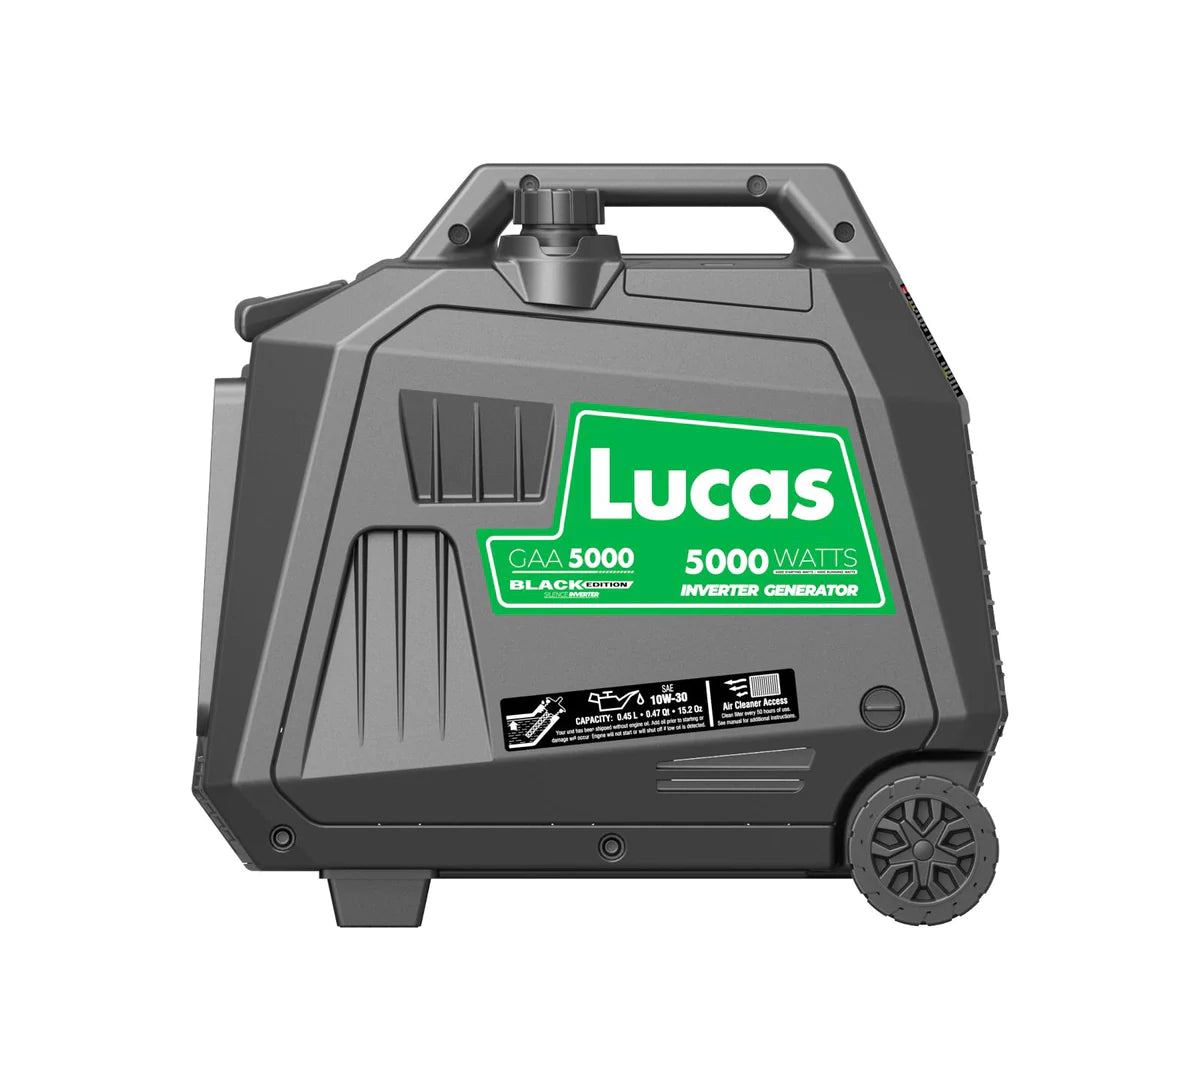 Generador inverter Lucas  5,000 WATTS PRENDE POR BEEPER, BOTÓN